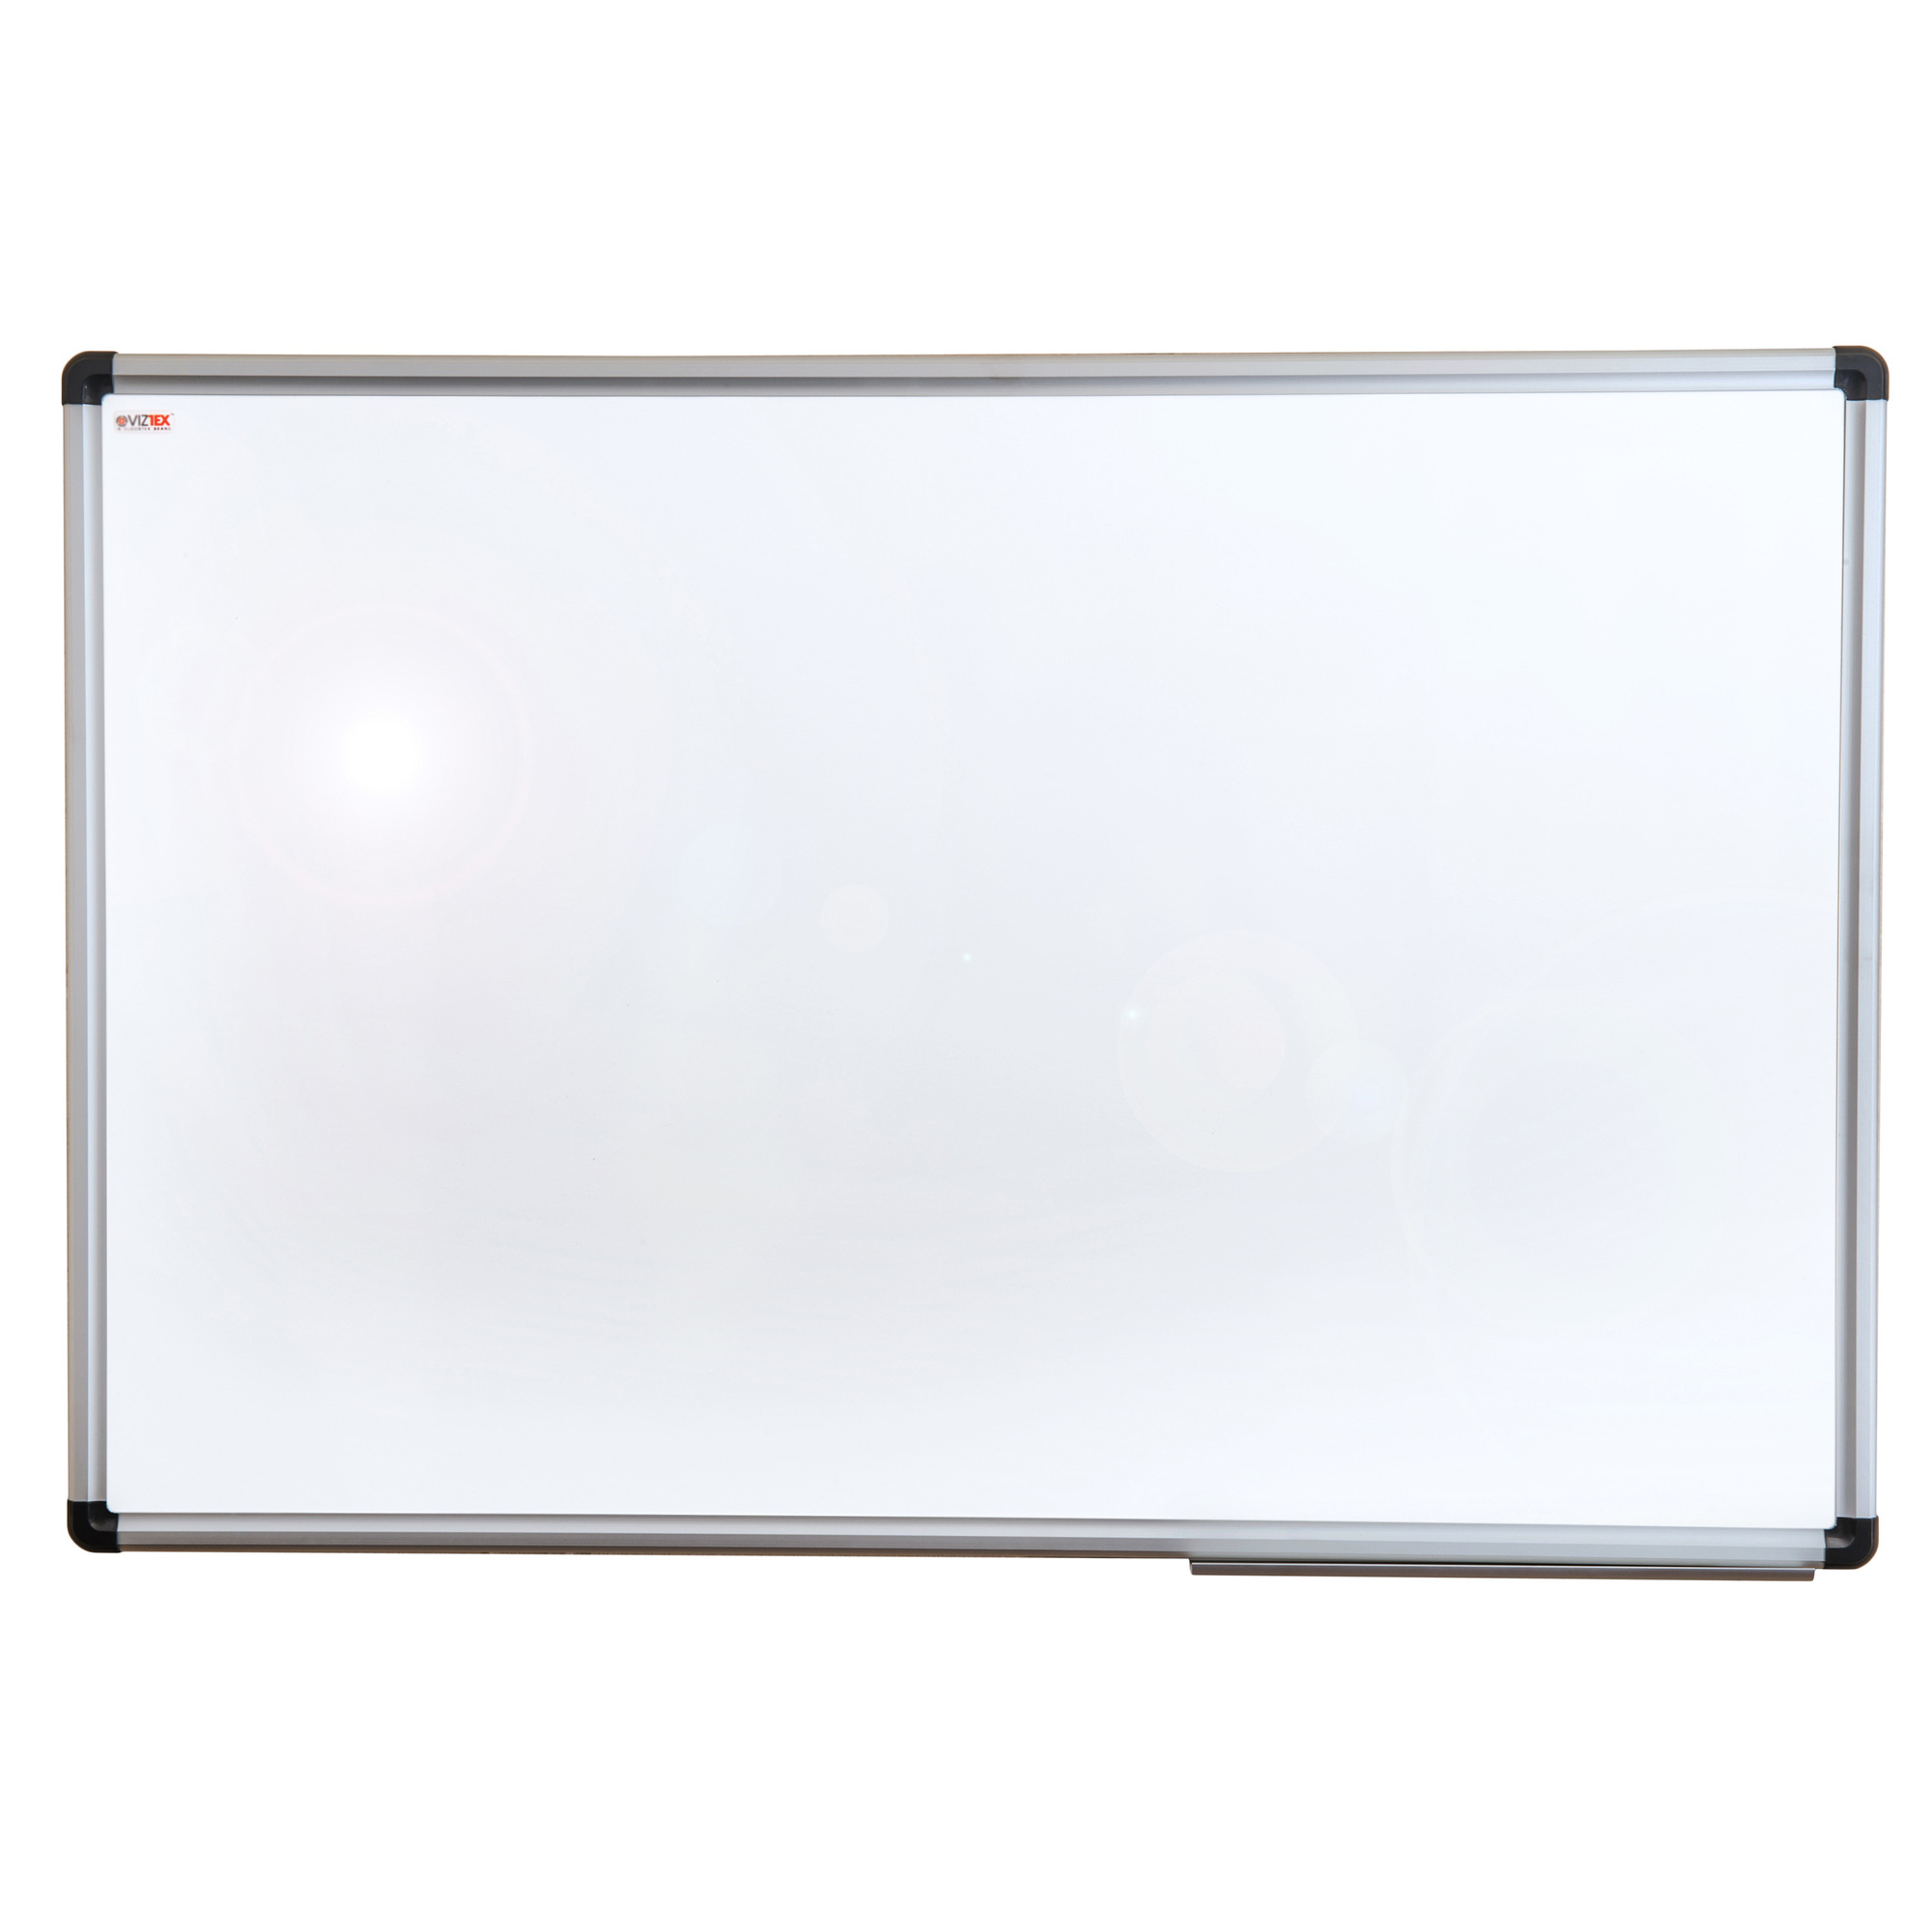 FLOORTEX Viztex , Porcelain Dry Erase Board; Aluminium Frame 48Inchx36Inch, Color Finish White, Model FCVPM4836A